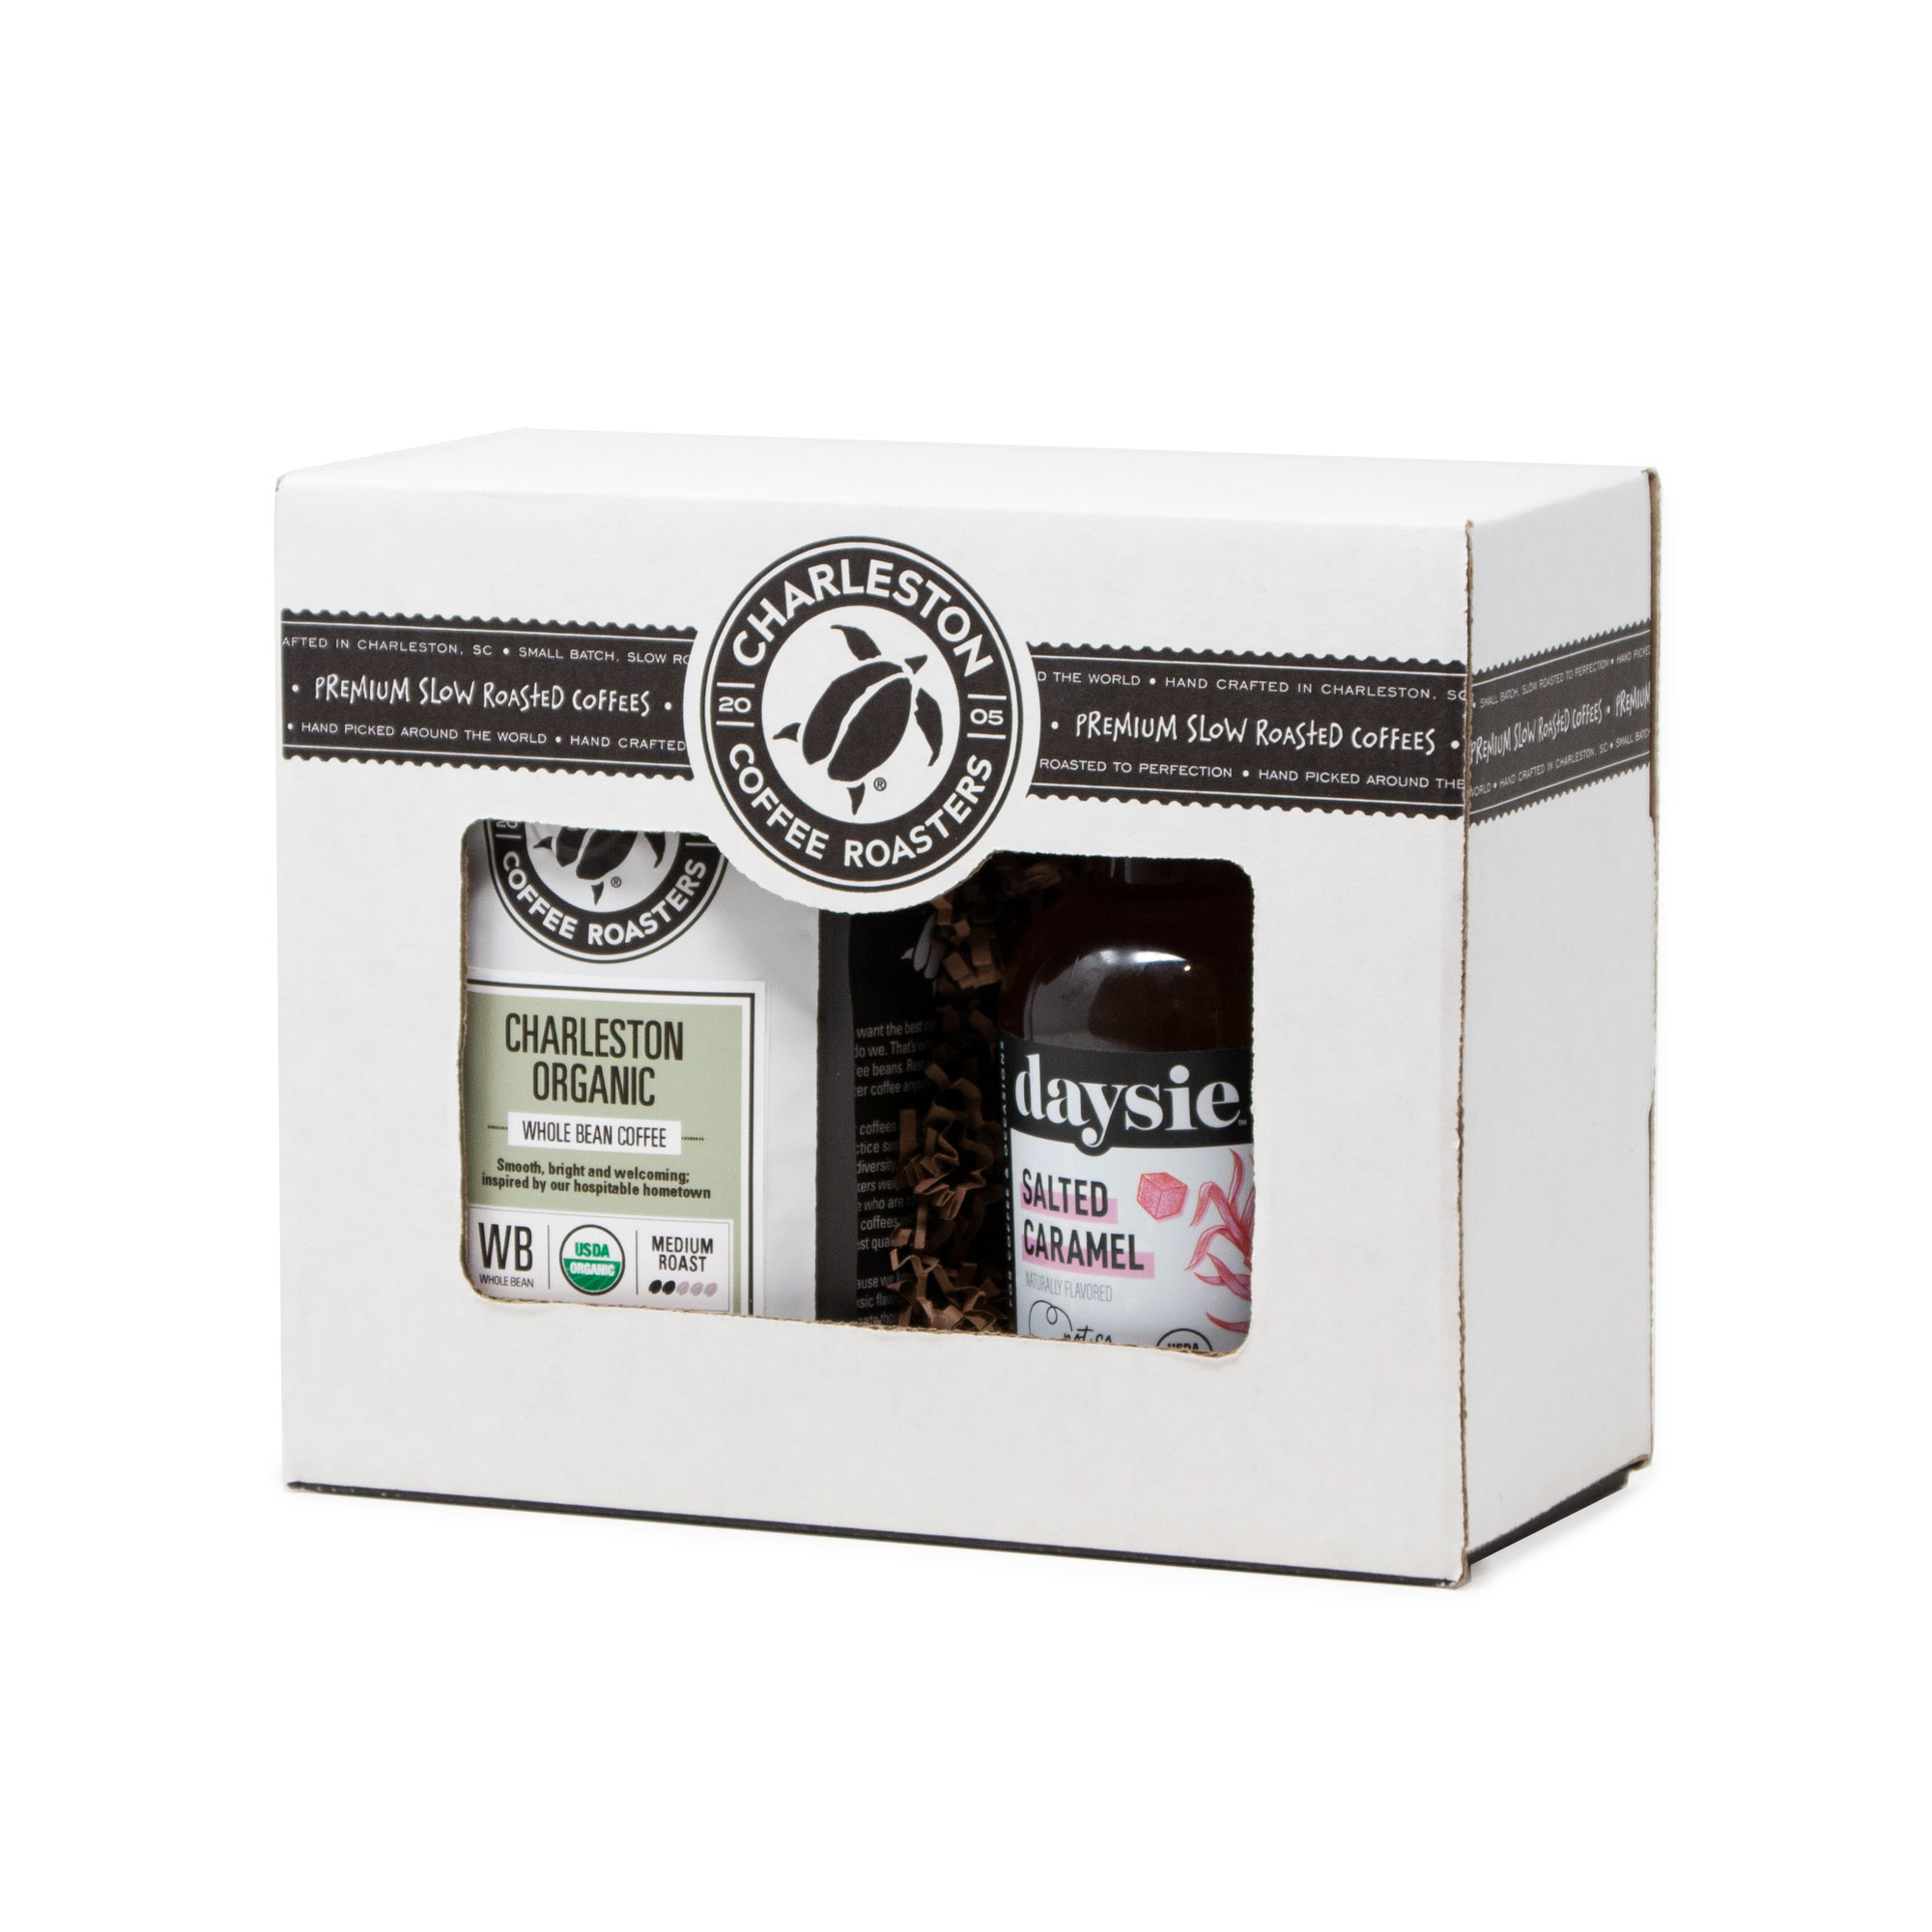 Charleston Coffee Roasters Charleston Organic + Daysie Salted Caramel Gift Box